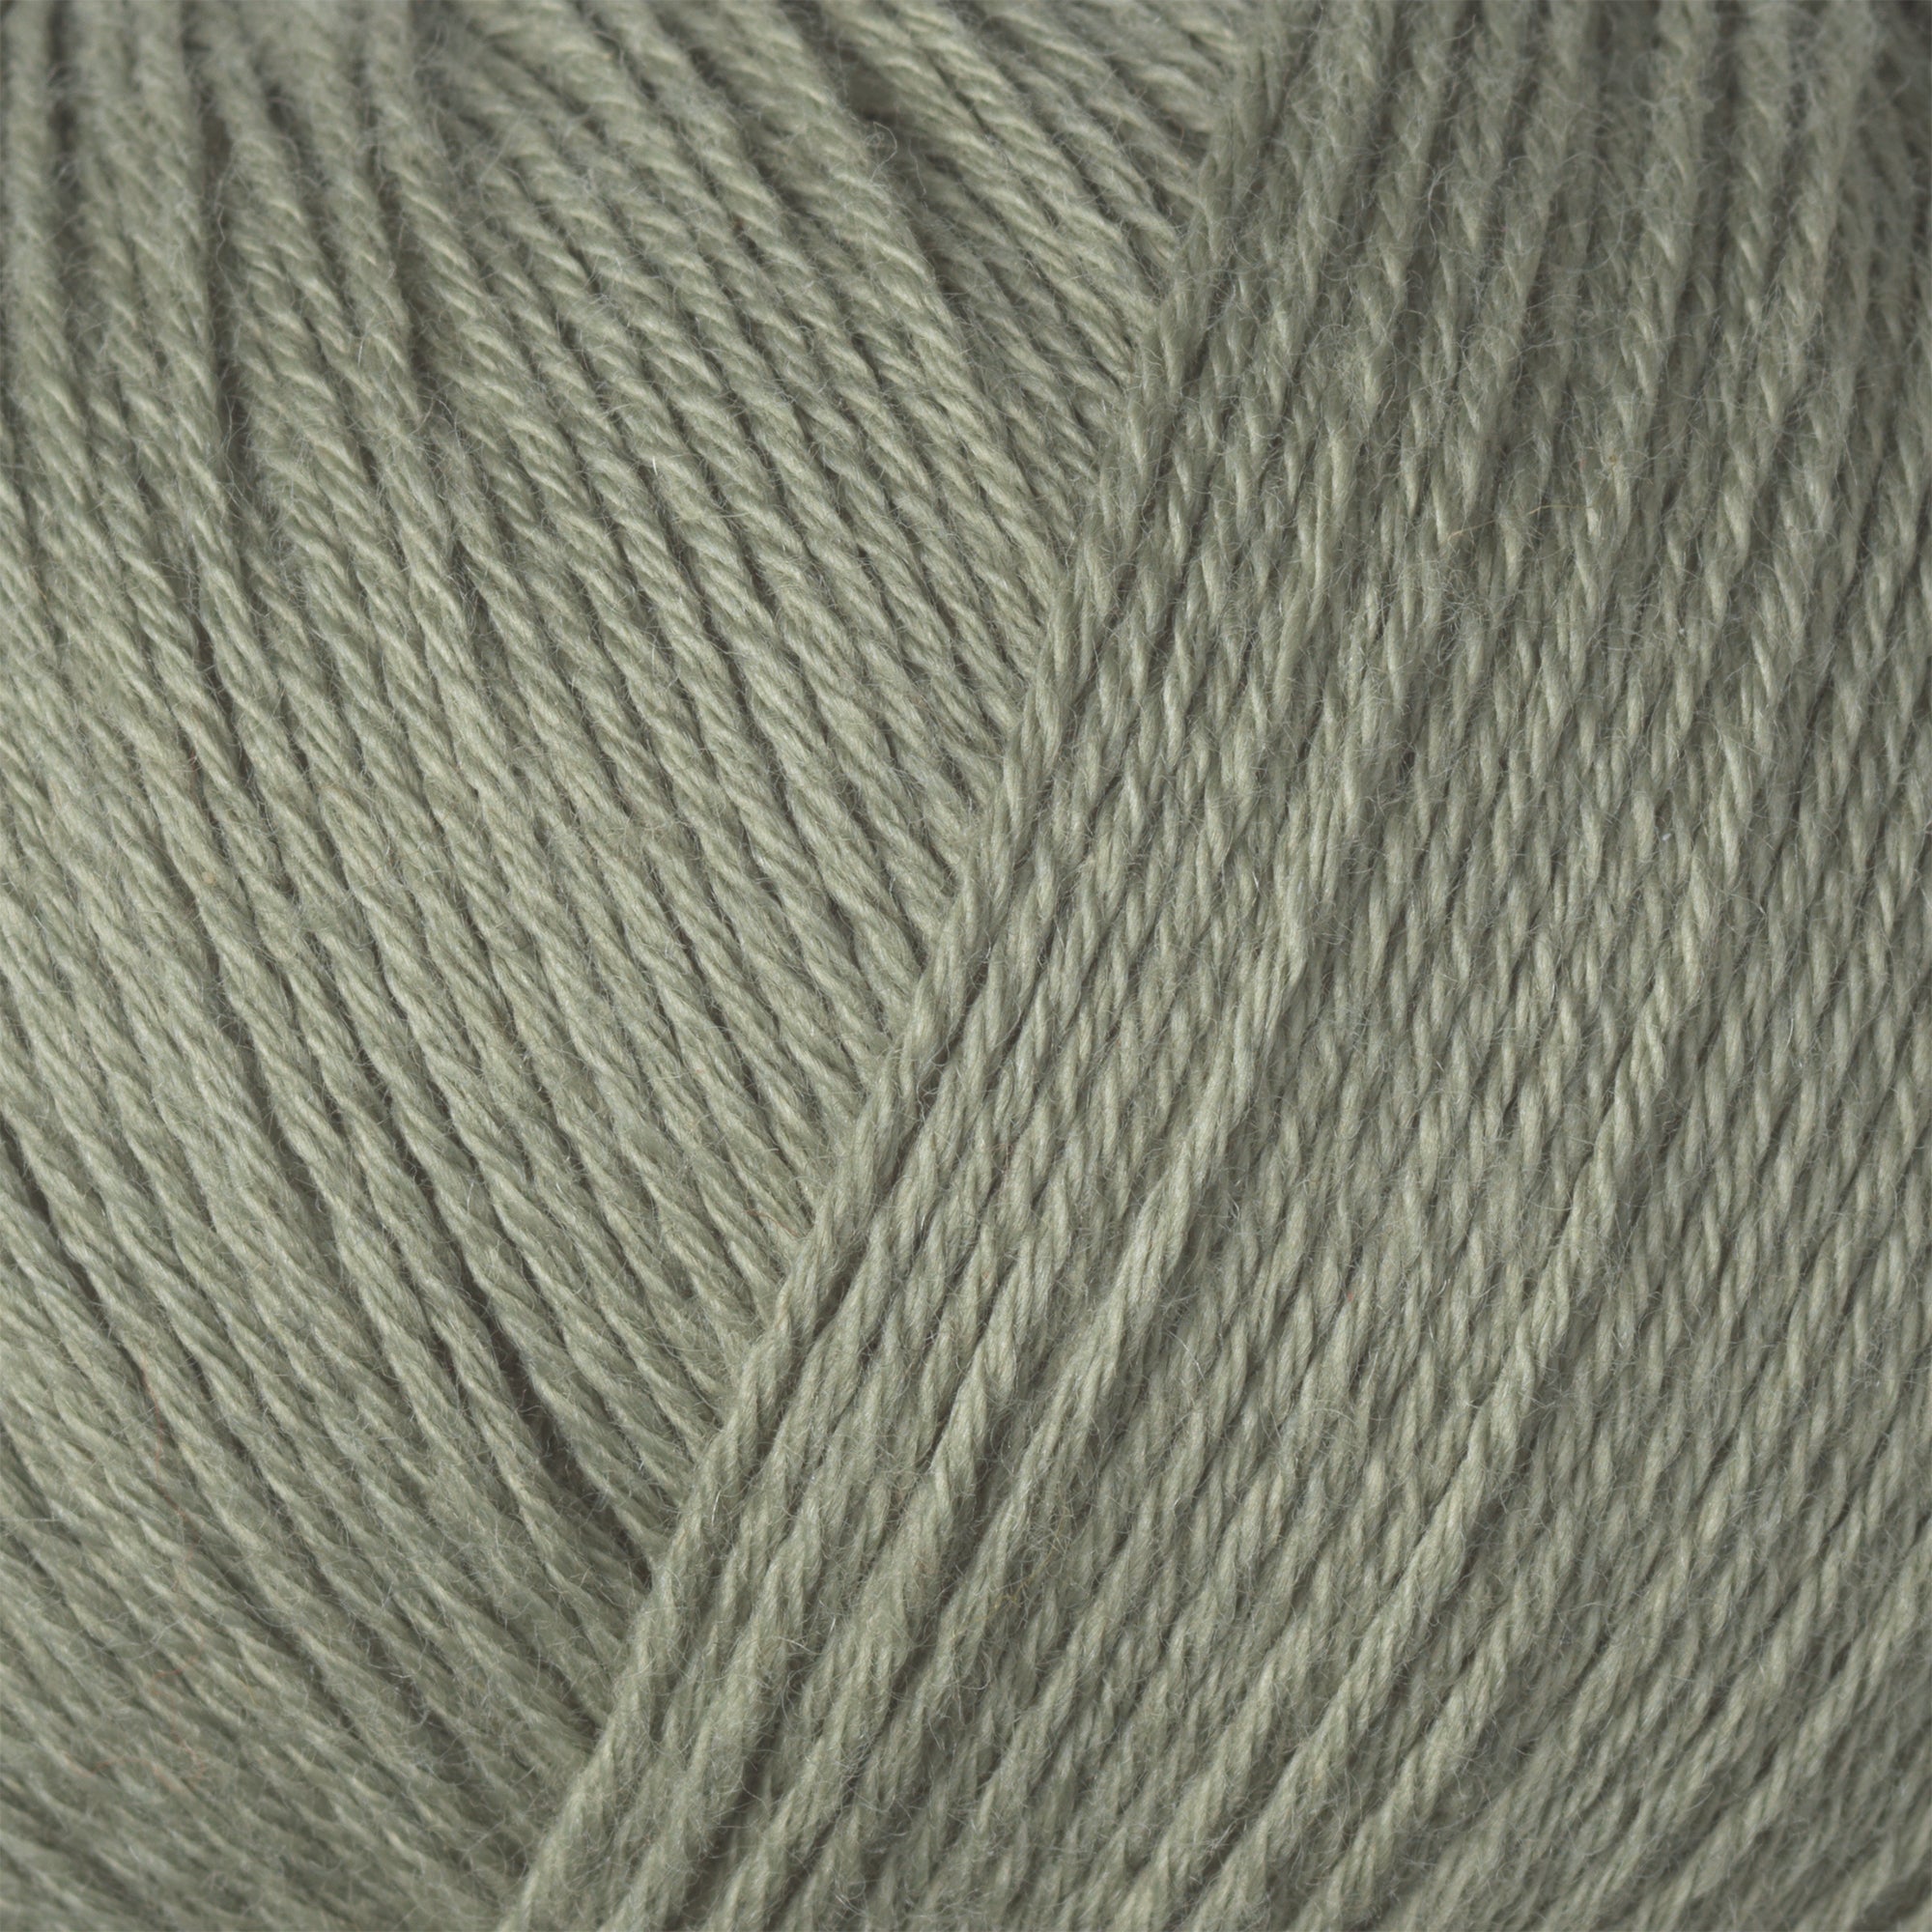 Knitting for Olive Cotton Merino - Dusty Artichoke